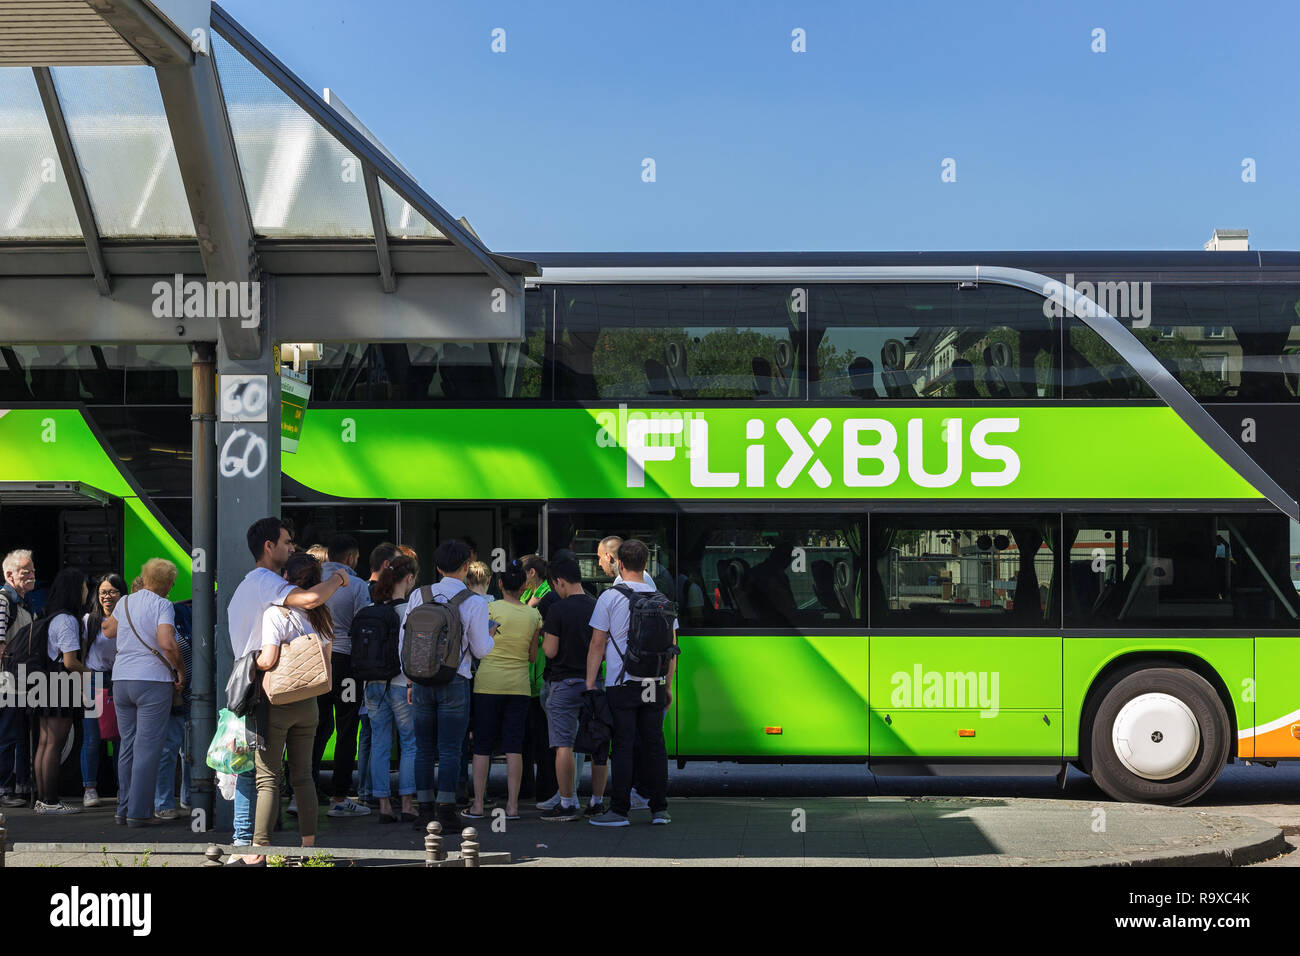 08.05.2018, Berlín, Alemania - El autobús des Fernbusunternehmens Flixbus am Zentralen Omnibusbahnhof Berlín. 0MC180508D407CARO [modelo de liberación: No, buen Foto de stock